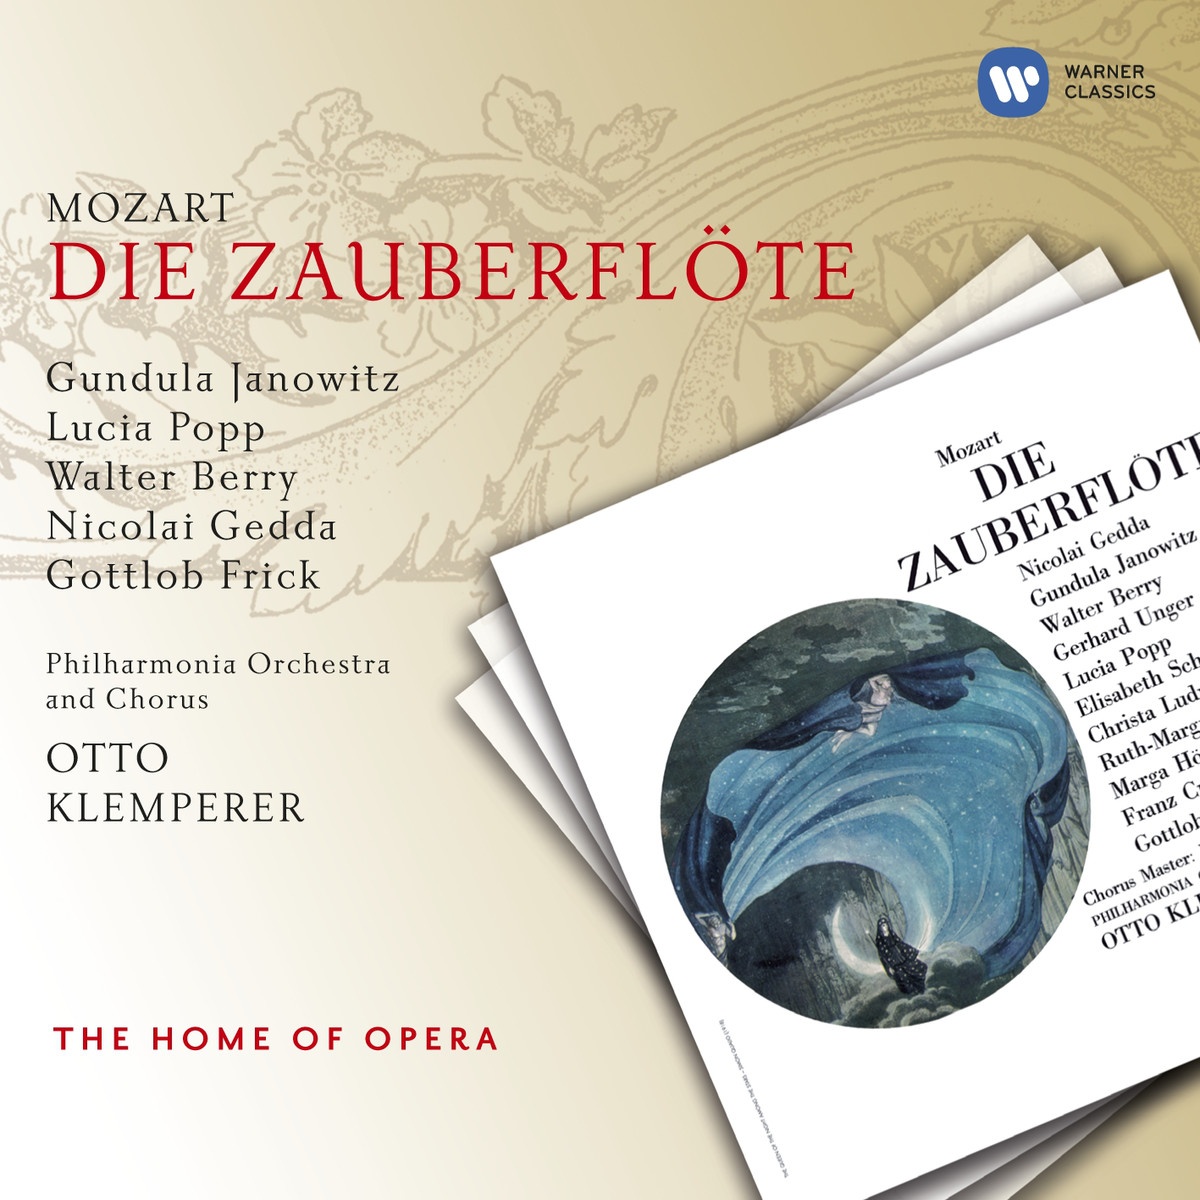 Die Zauberfl te, ' The Magic Flute' K620 2000 Digital Remaster, ACT 2: Arie  Chor: O, Isis und Osiris Sarastro Chor